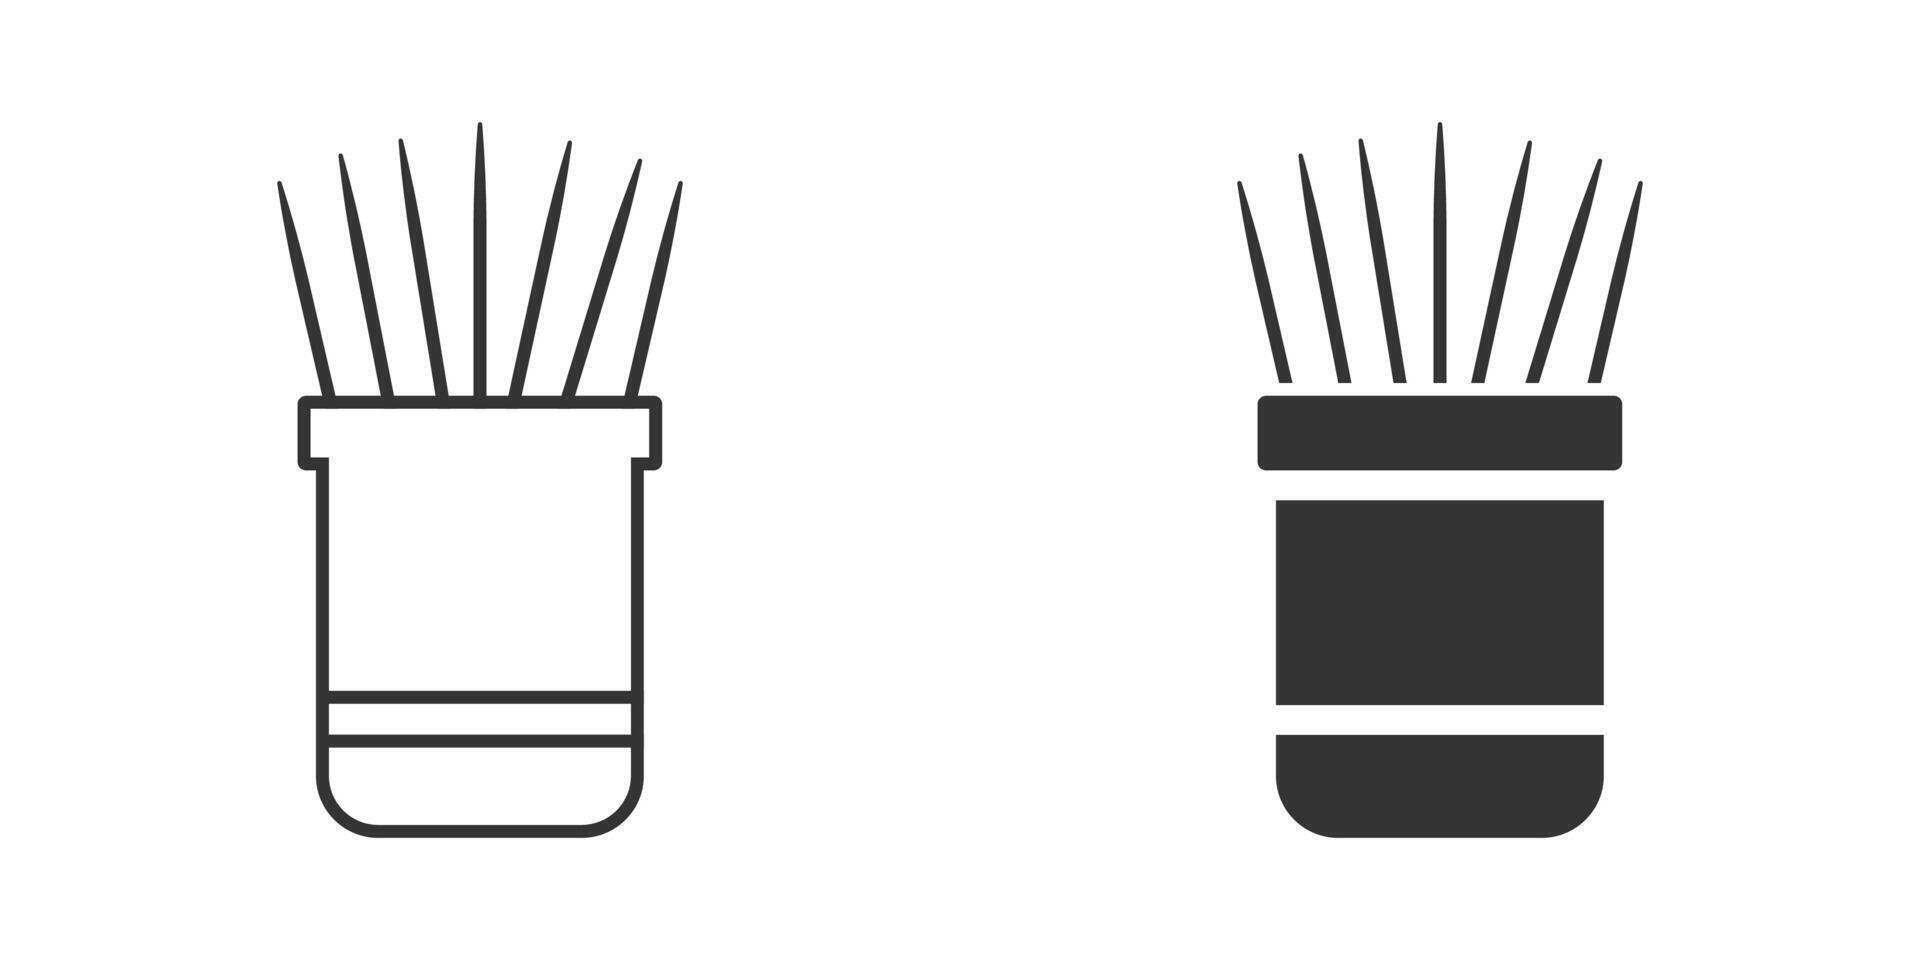 Toothpicks icon. Simple design. Vector illustration.